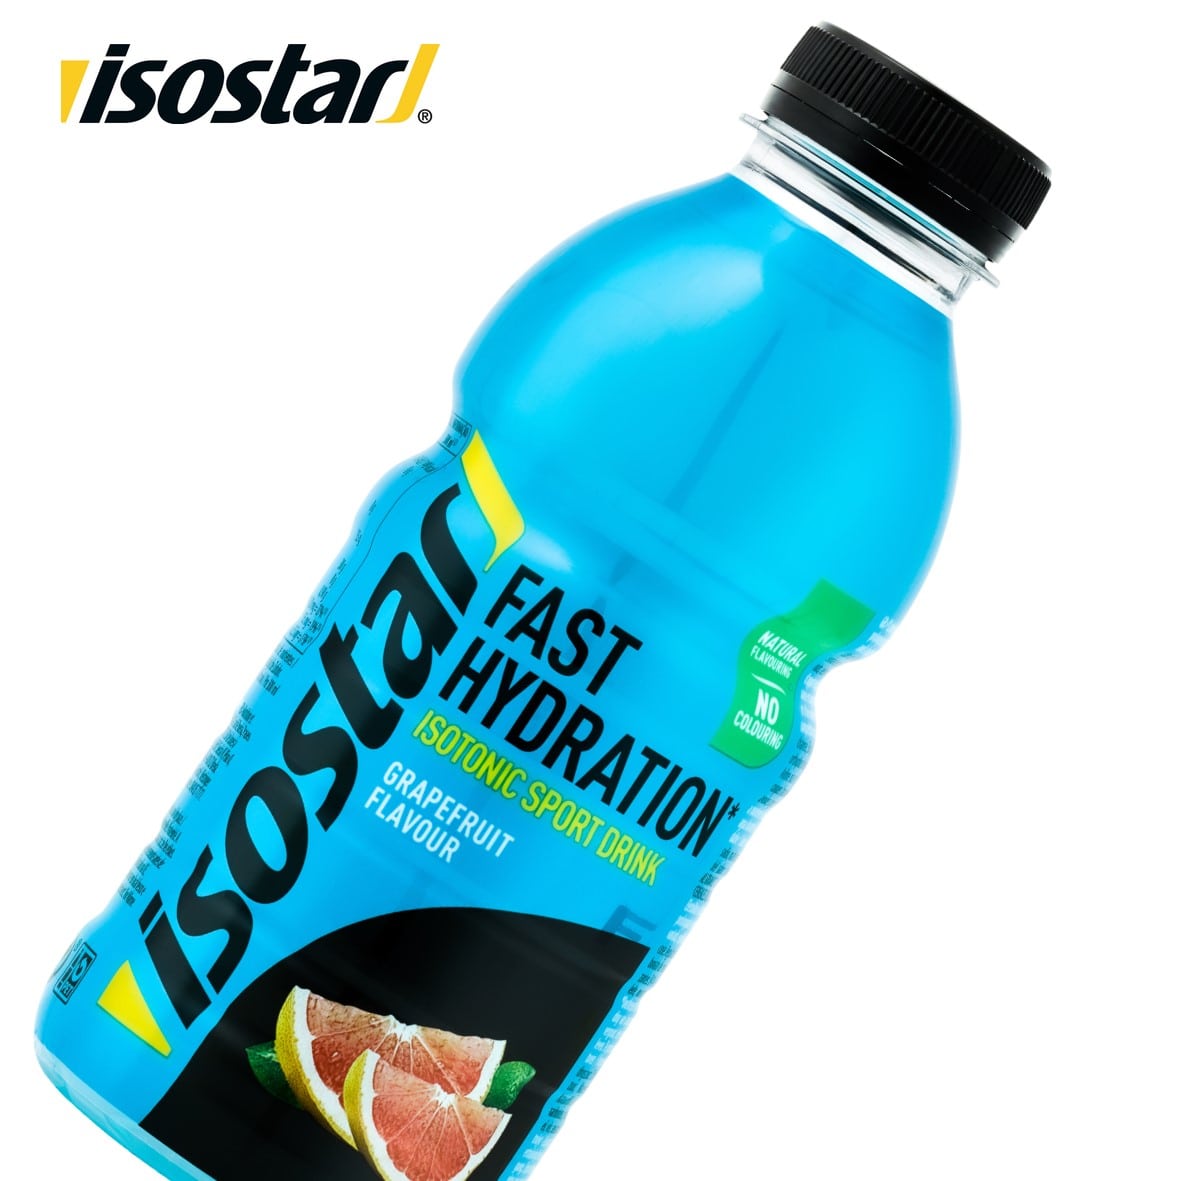 Isostar Hydrate&Perform (5dl PET)